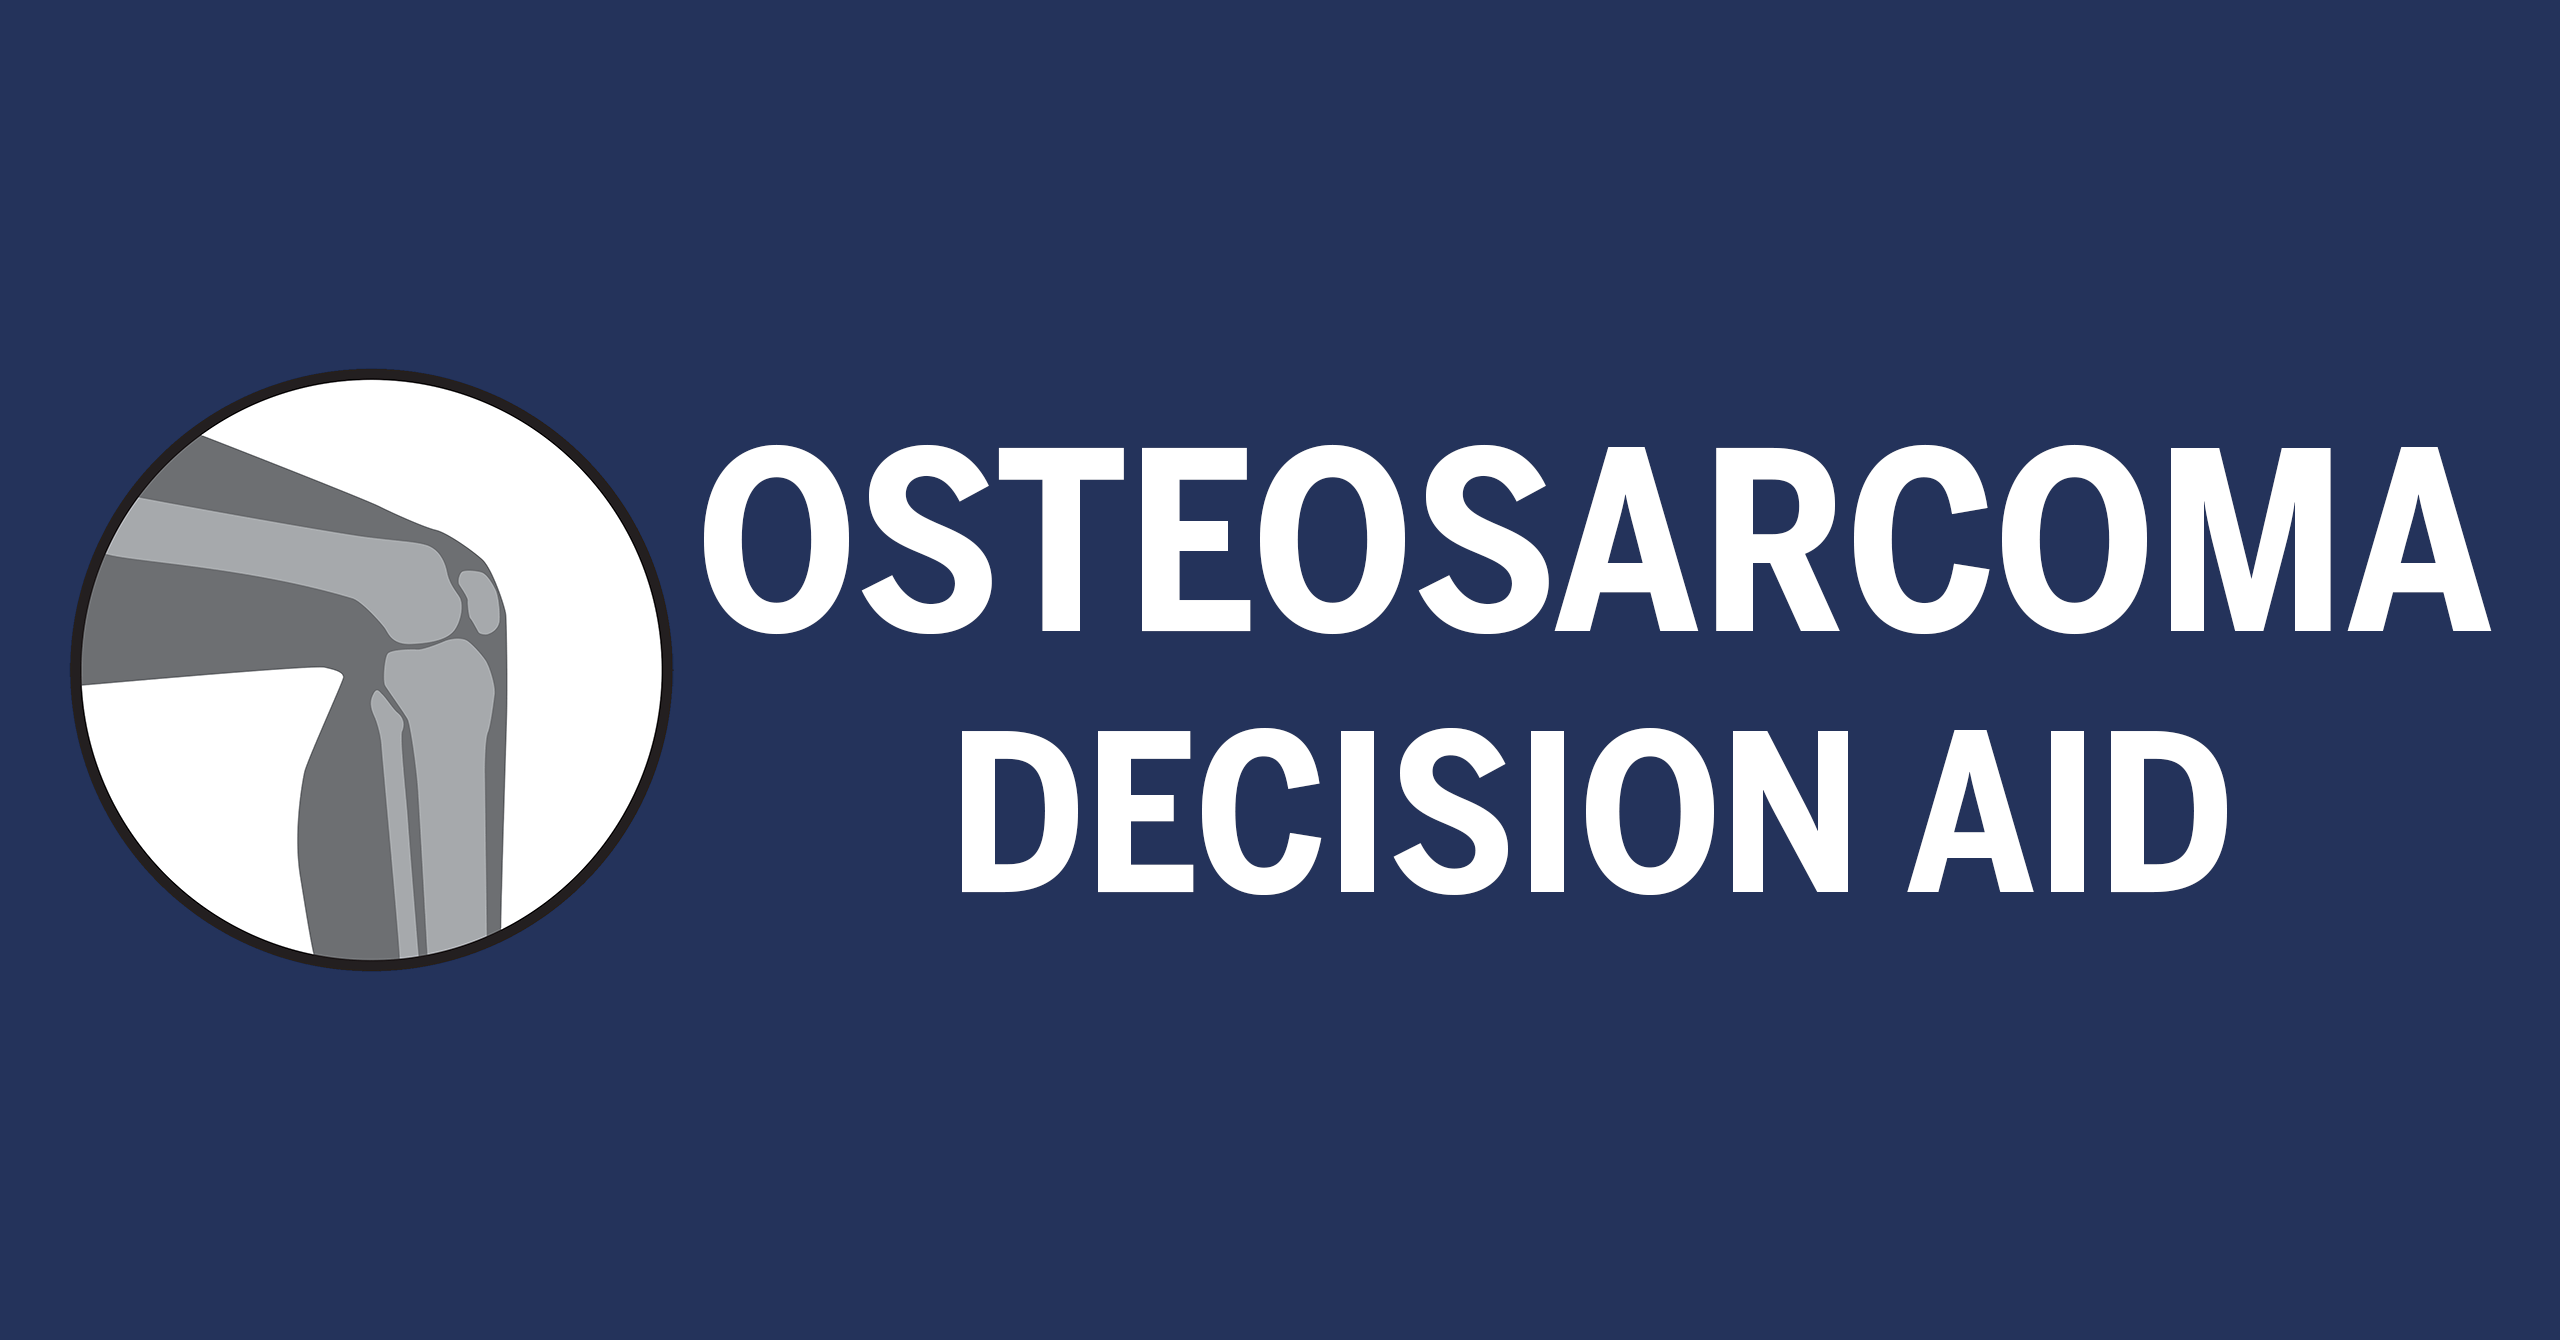 (c) Osteosarcomadecisionaid.com